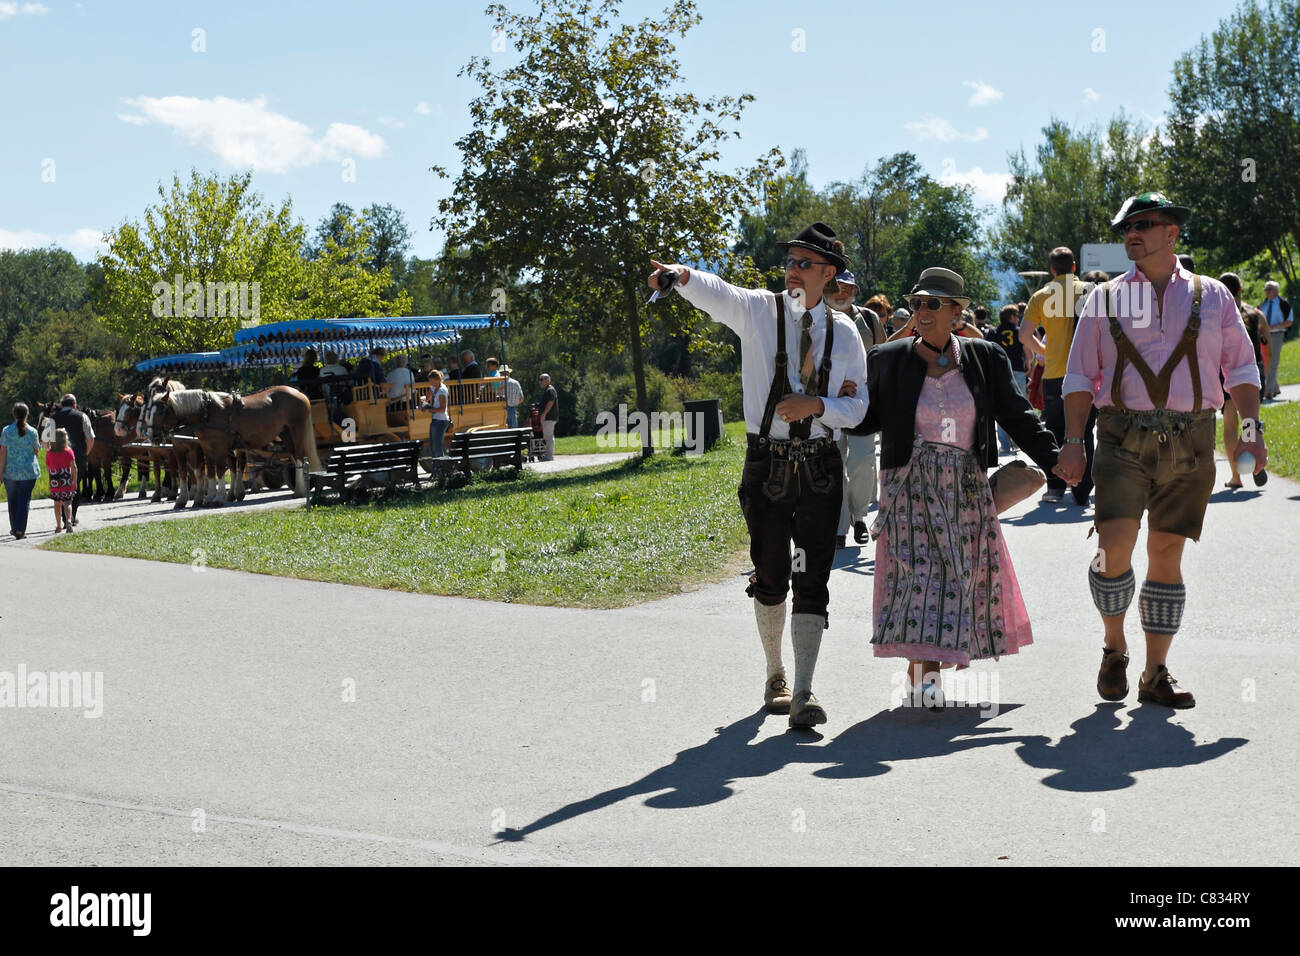 People in traditional Bavarian Dress, Herreninsel Chiemgau Upper Bavaria Germany Stock Photo